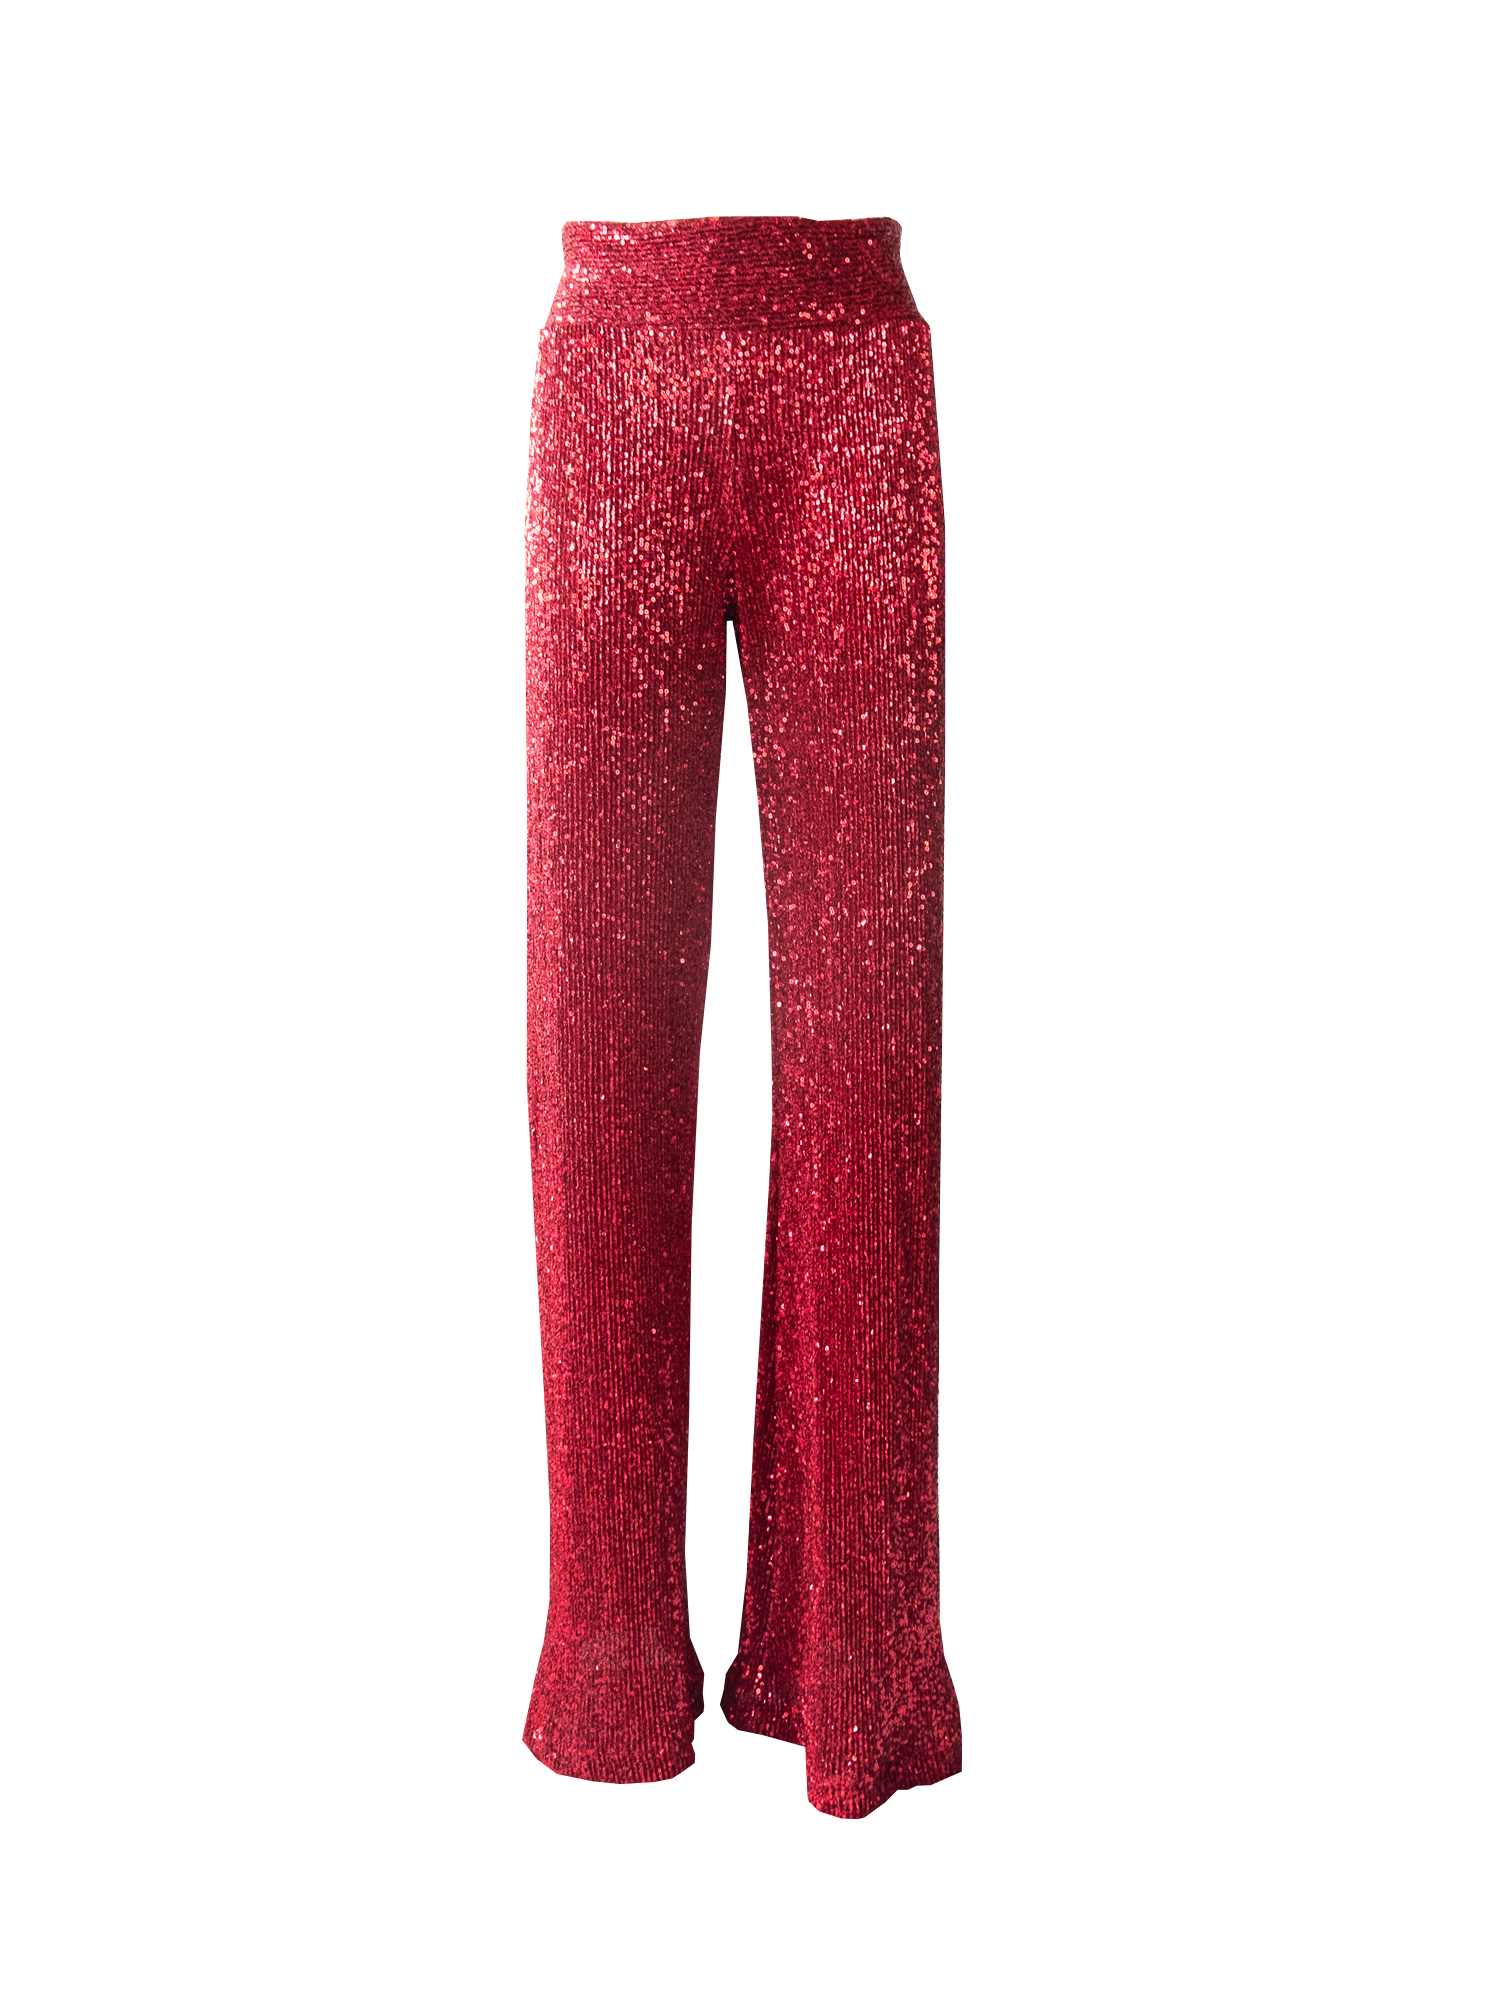 MIMI - red sequin palazzo pants